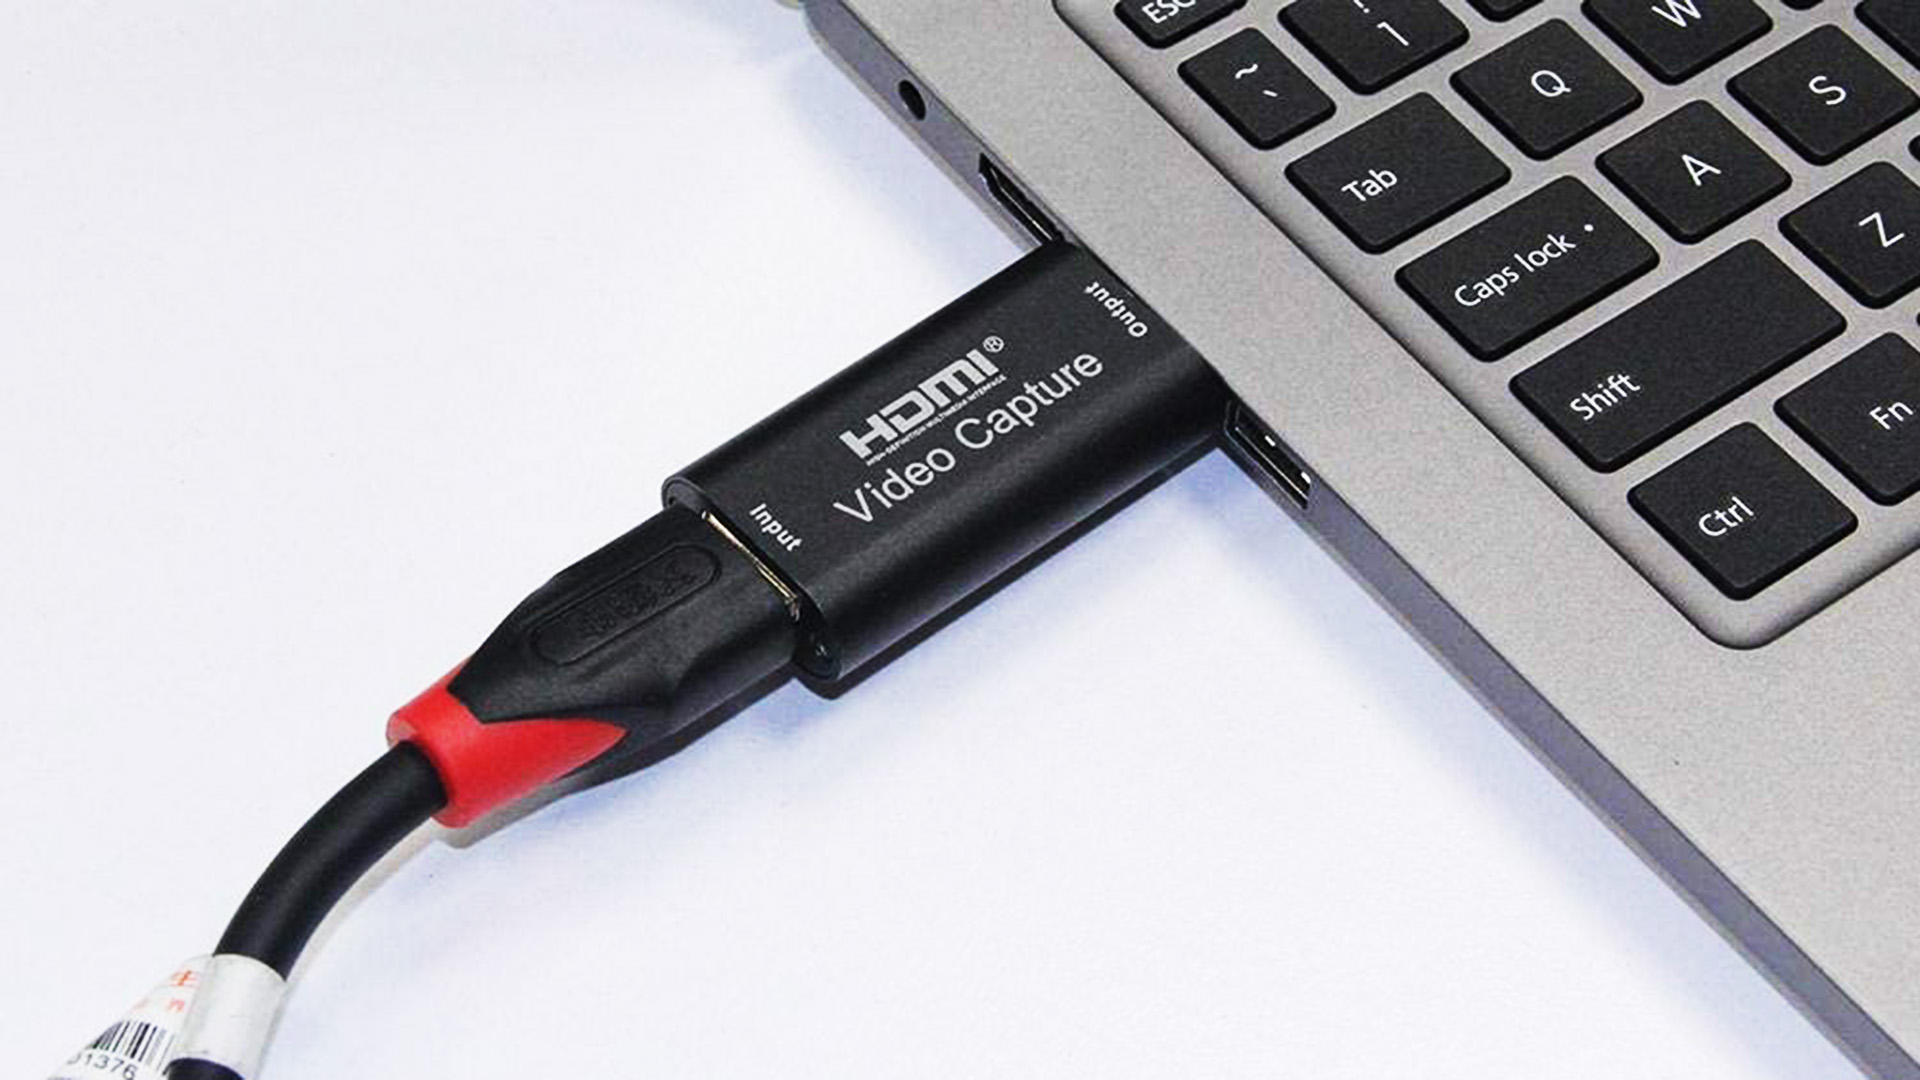 The Lightcolor HDMI to USB adaptor. Image: Amazon.com.